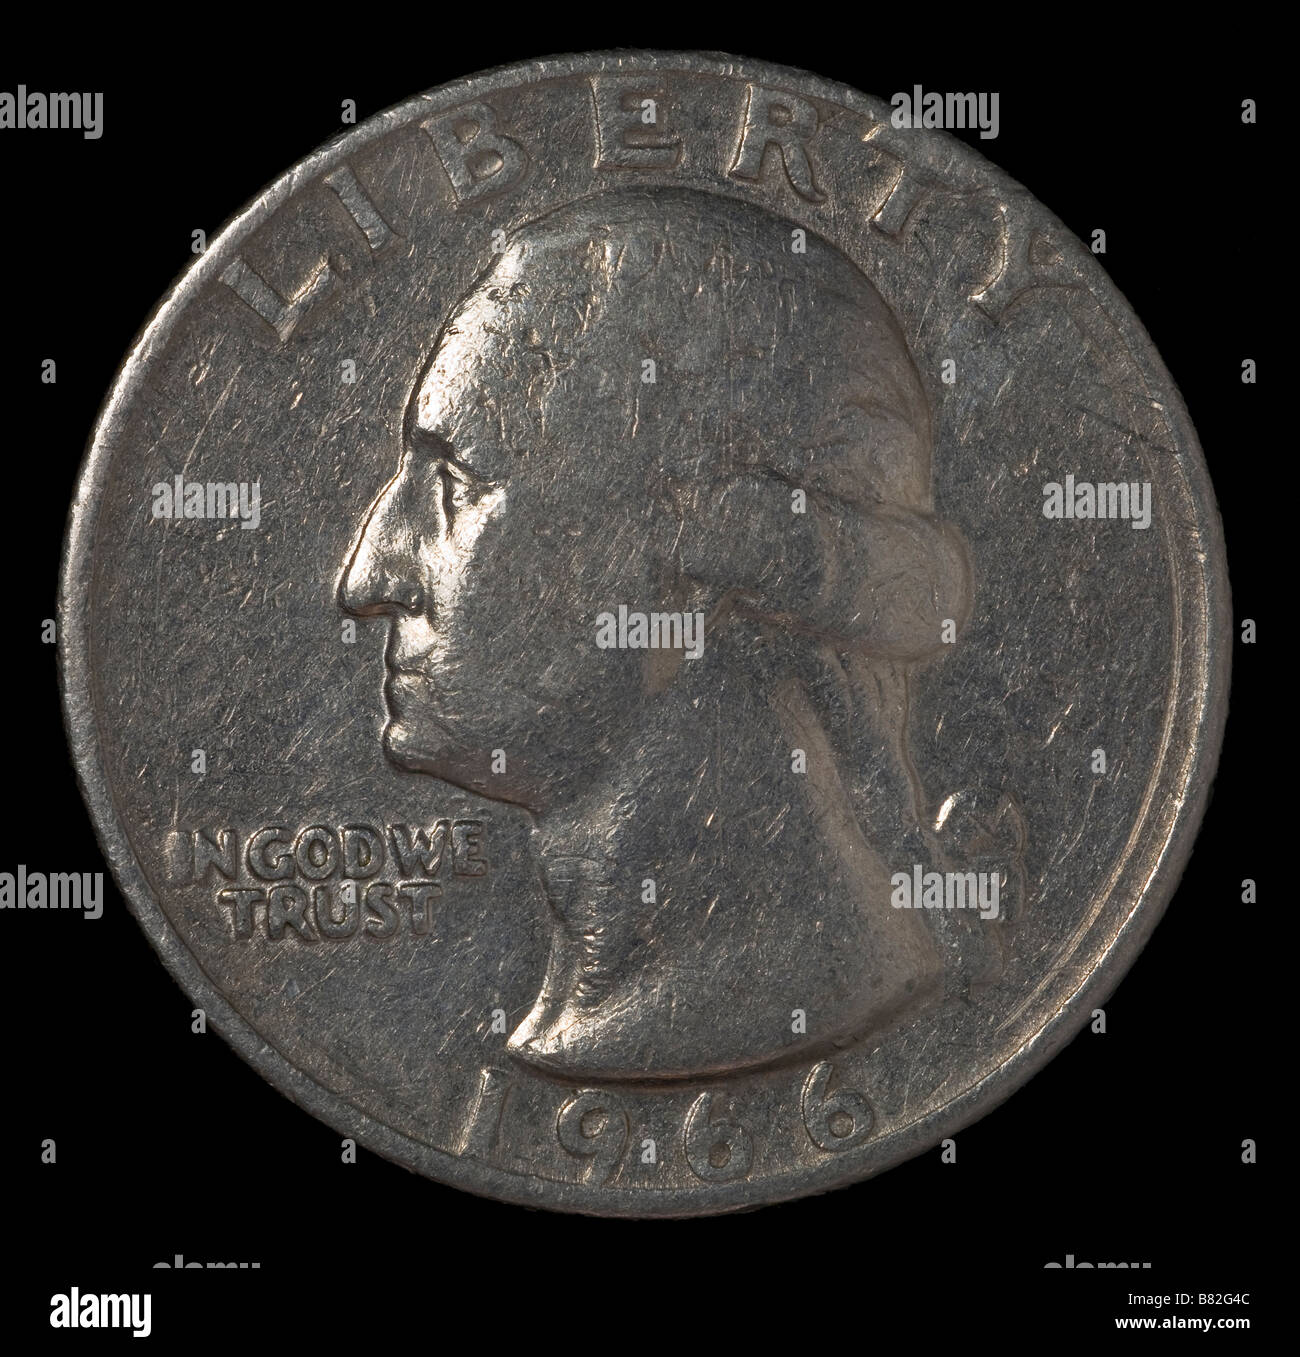 USA quarter 25 cents coin with George Washington profile Stock Photo